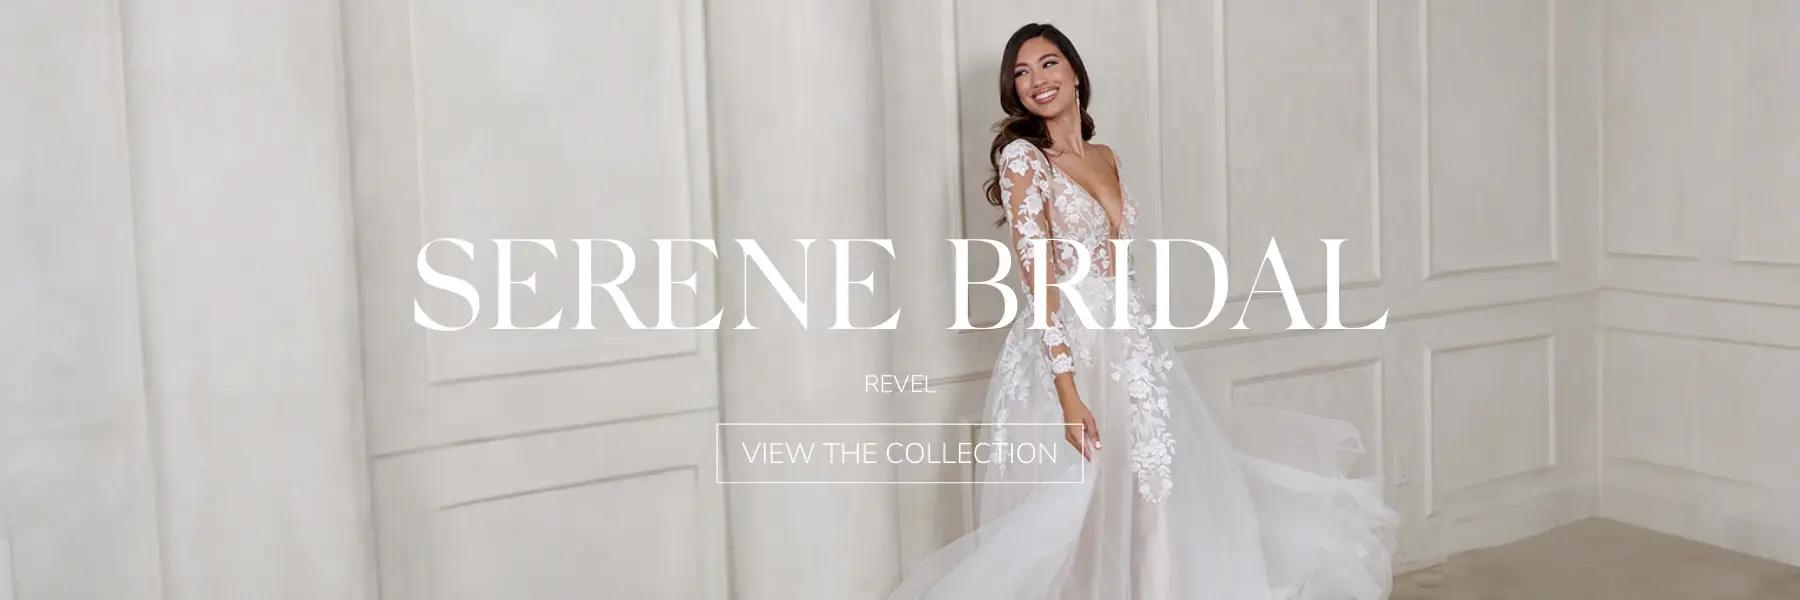 Model wearing Serene Bridal dress